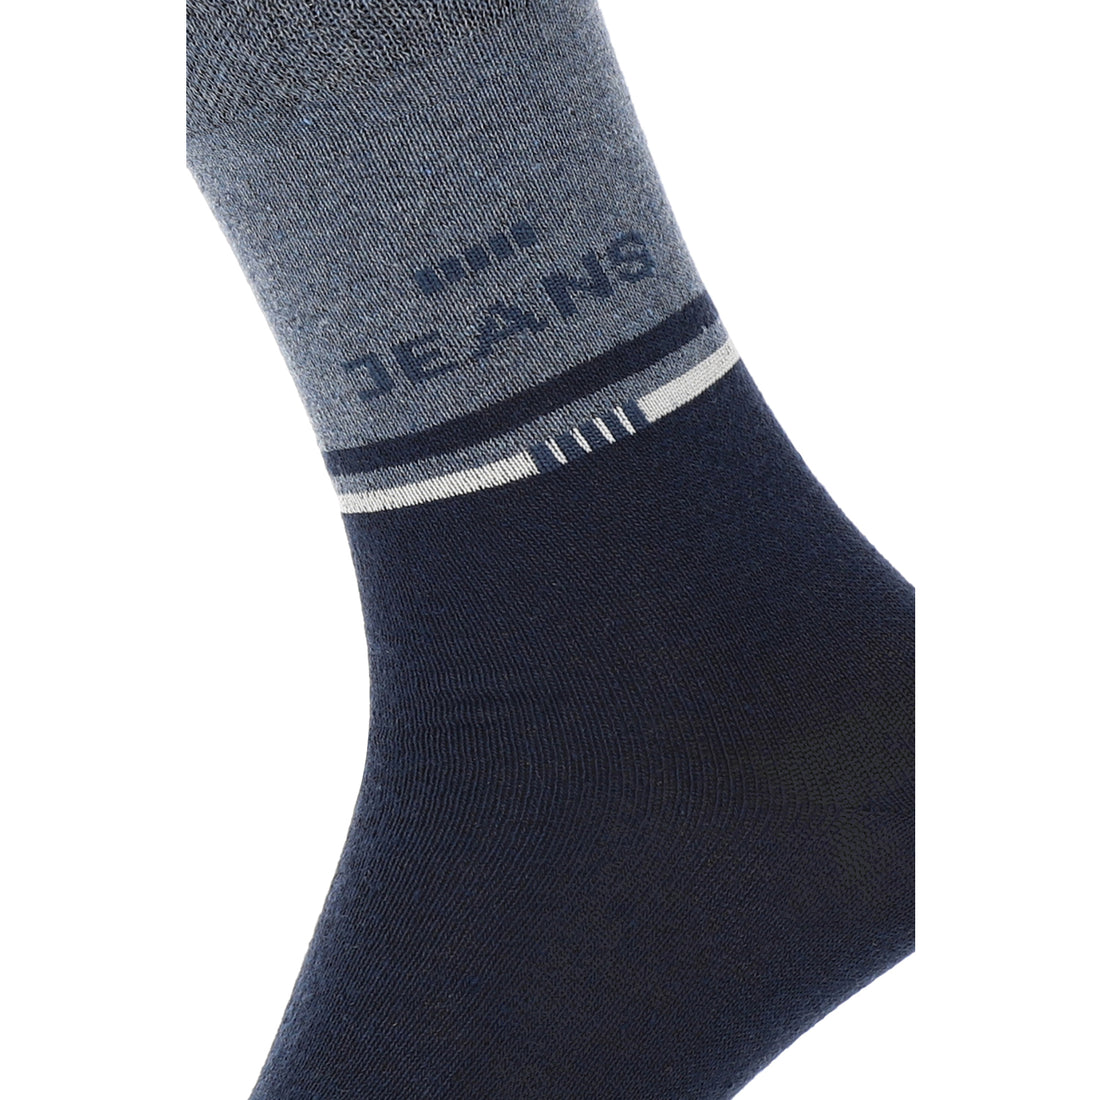 ChiliLifestyle Socken Jeans, Damen, Herren, 10 Paar, Baumwolle, Blau Töne